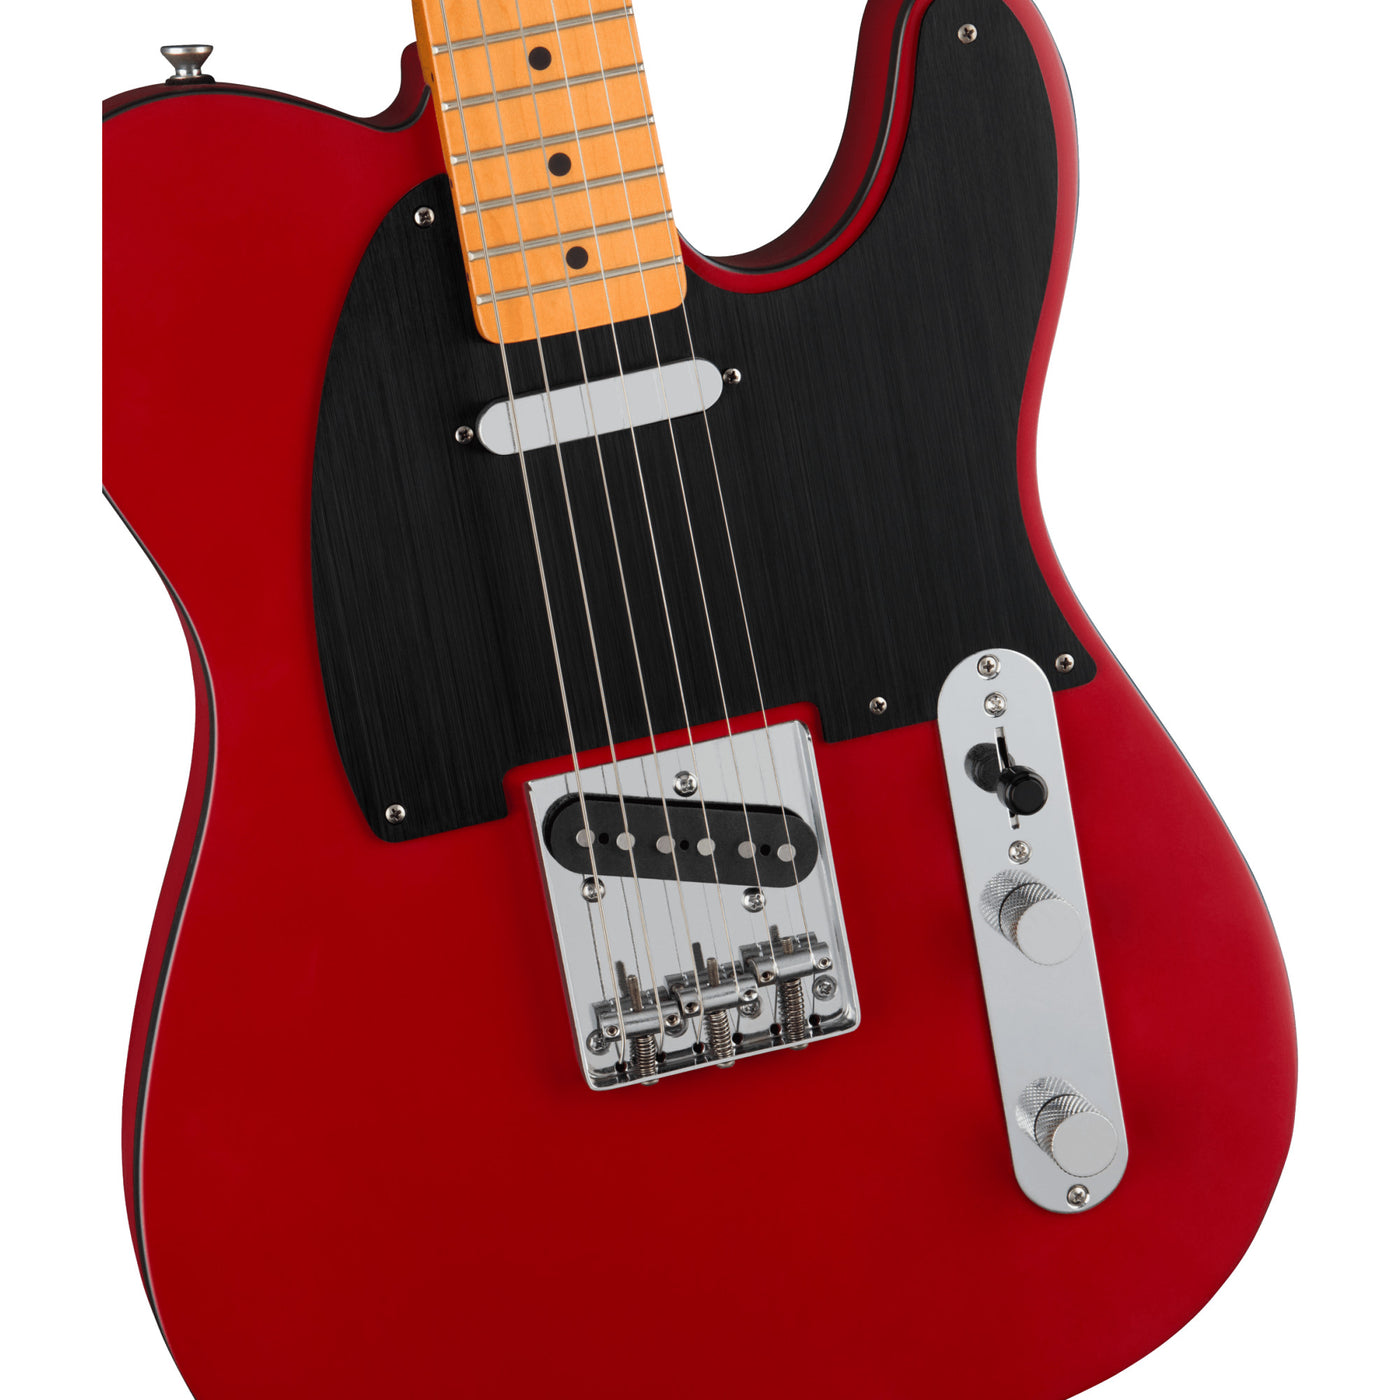 Fender Squier 40th Anniversary Telecaster, Vintage Edition Electric Guitar, Satin Dakota Red (0379501554)